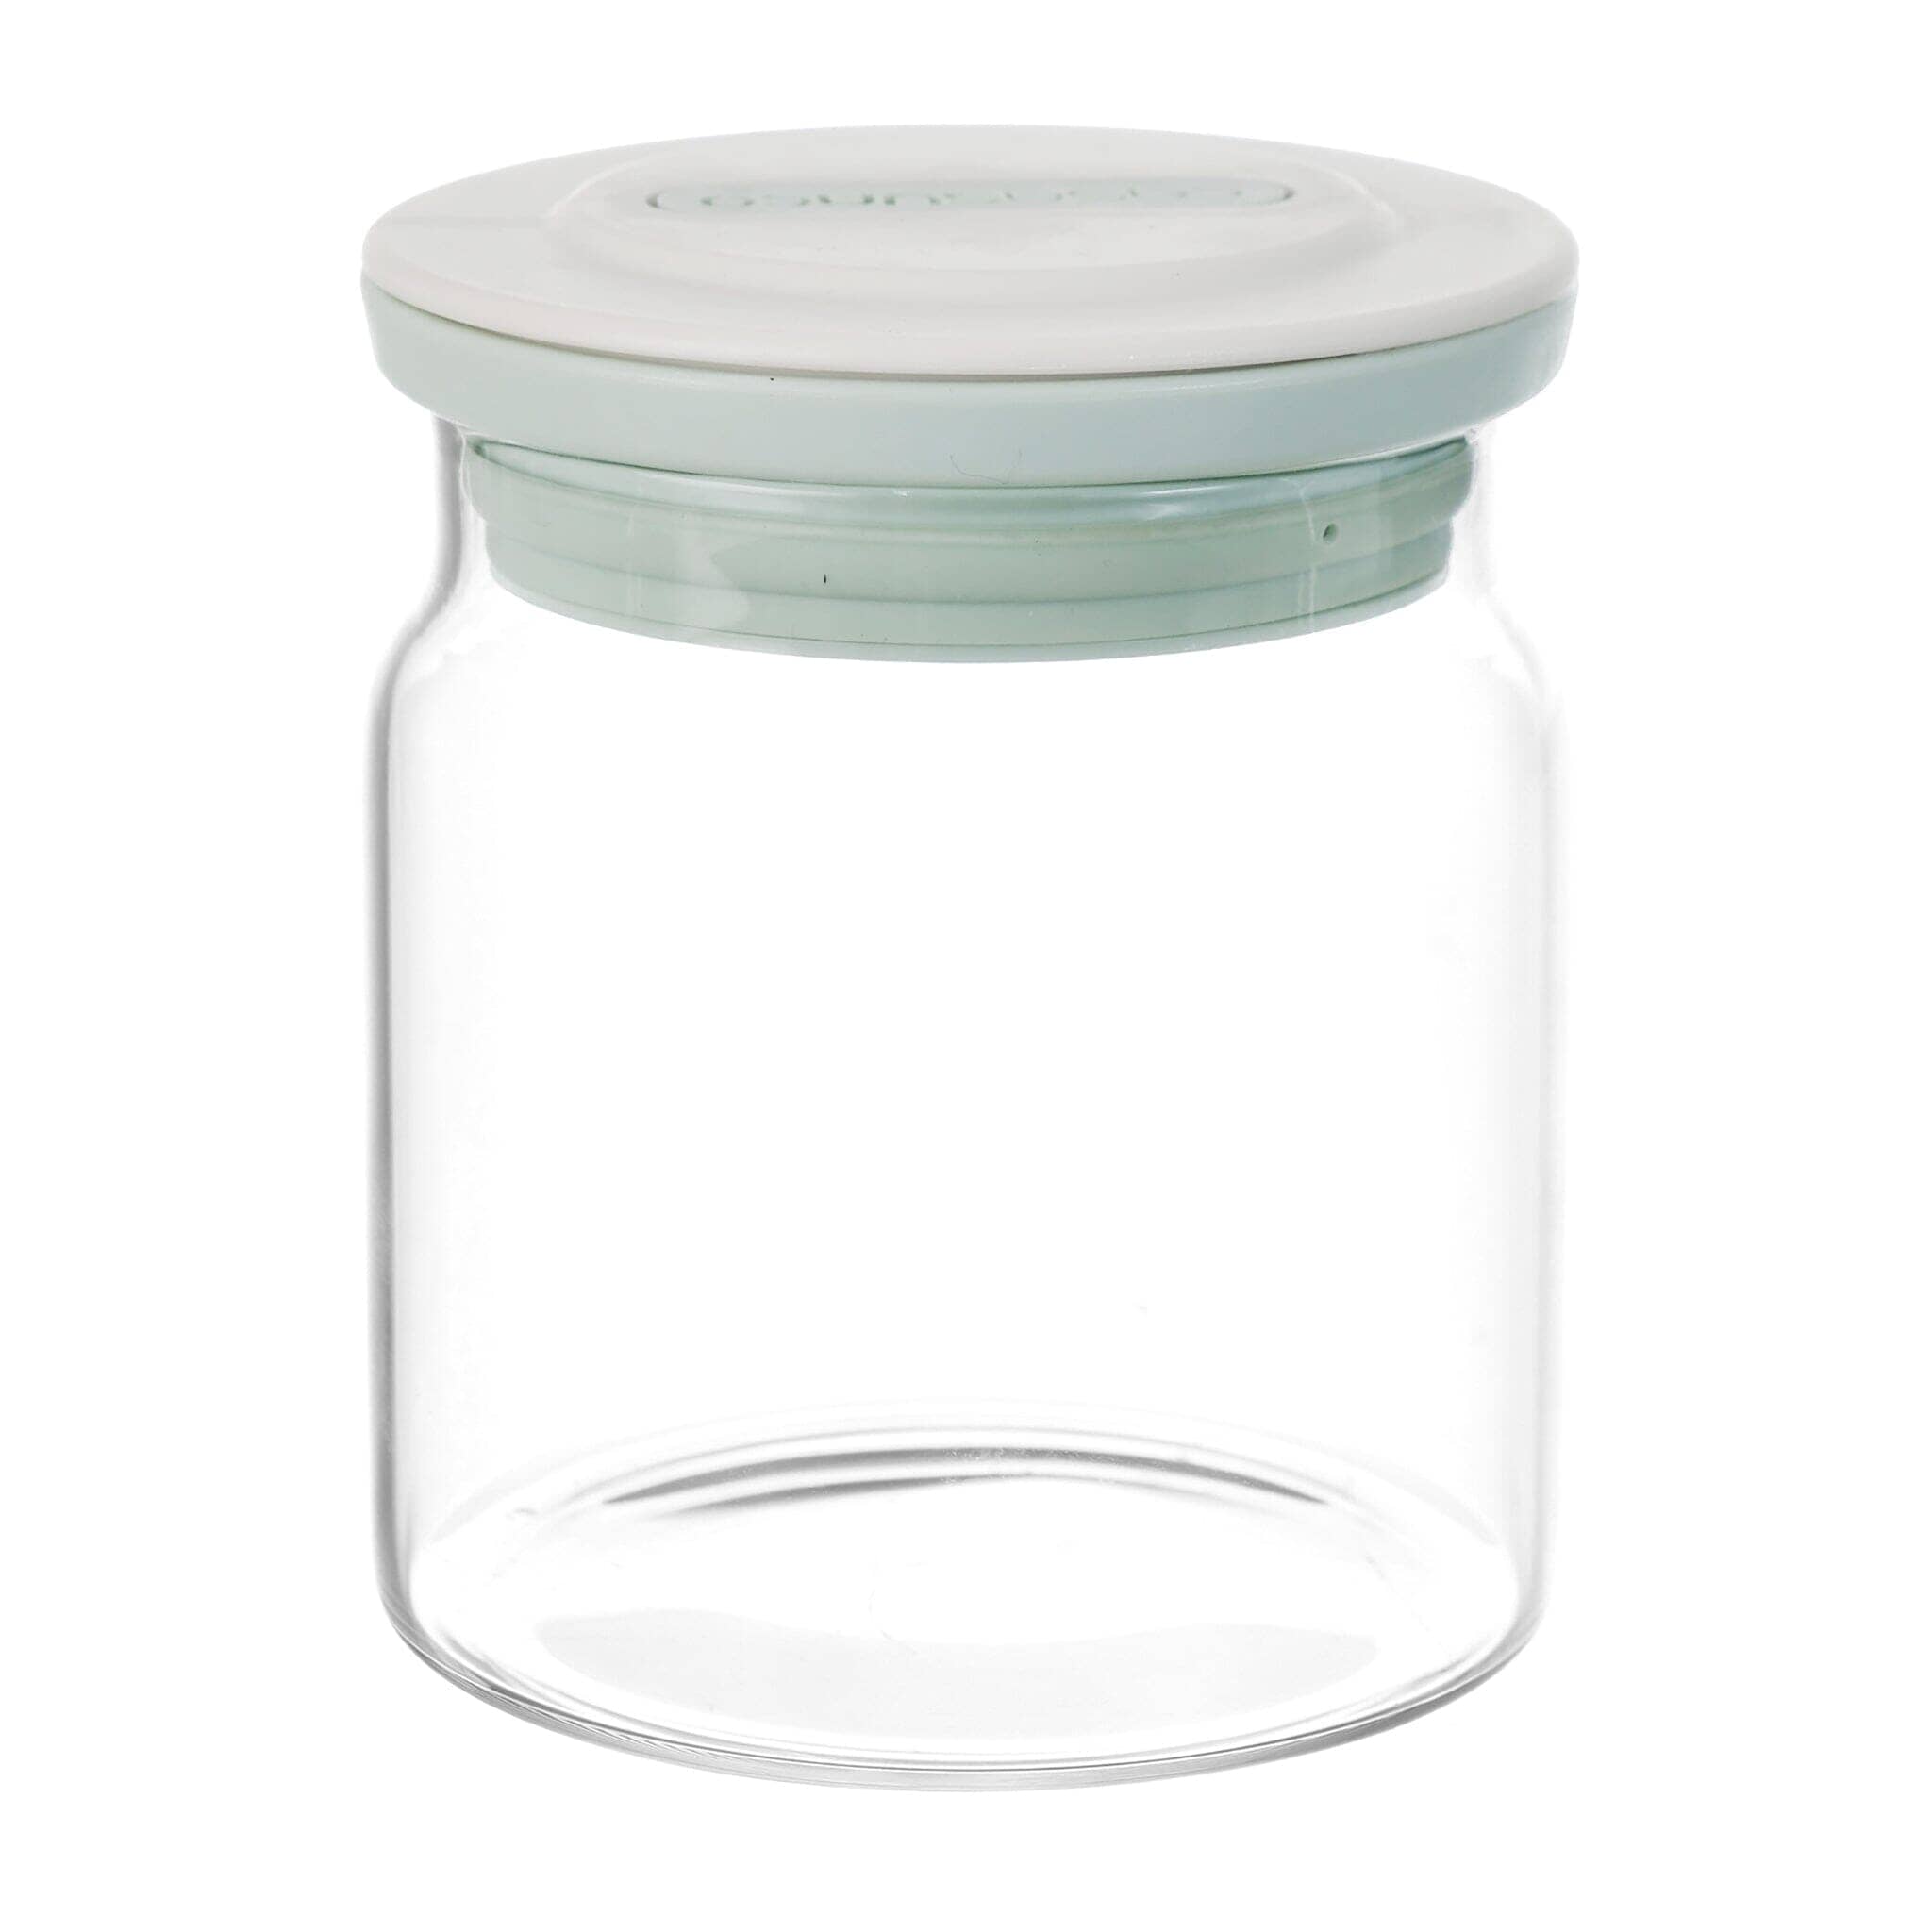 CasaSunco - Glass Jar with Silicone Cover - Green - 8x10cm - 520008110